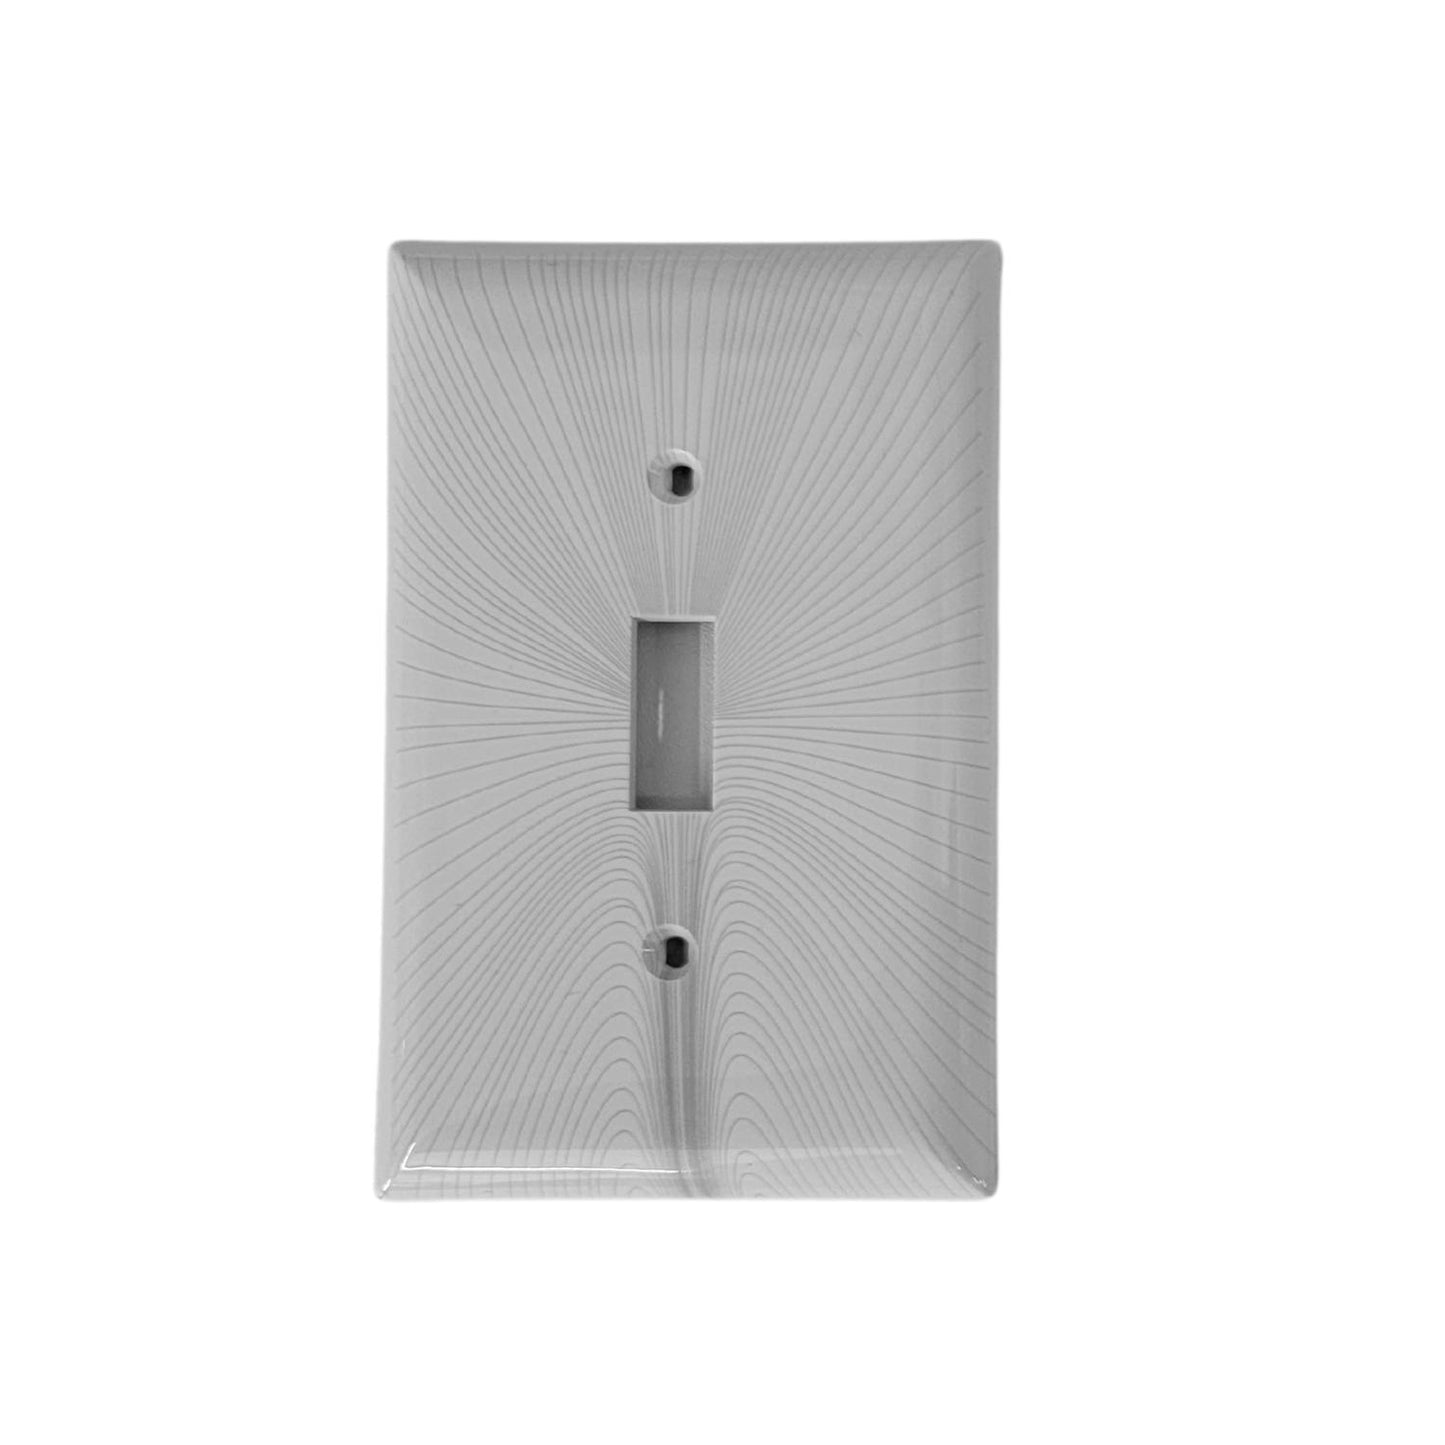 Geometric Design Single Toggle Light Switch Cover Wall Plate White LA143-PWP12